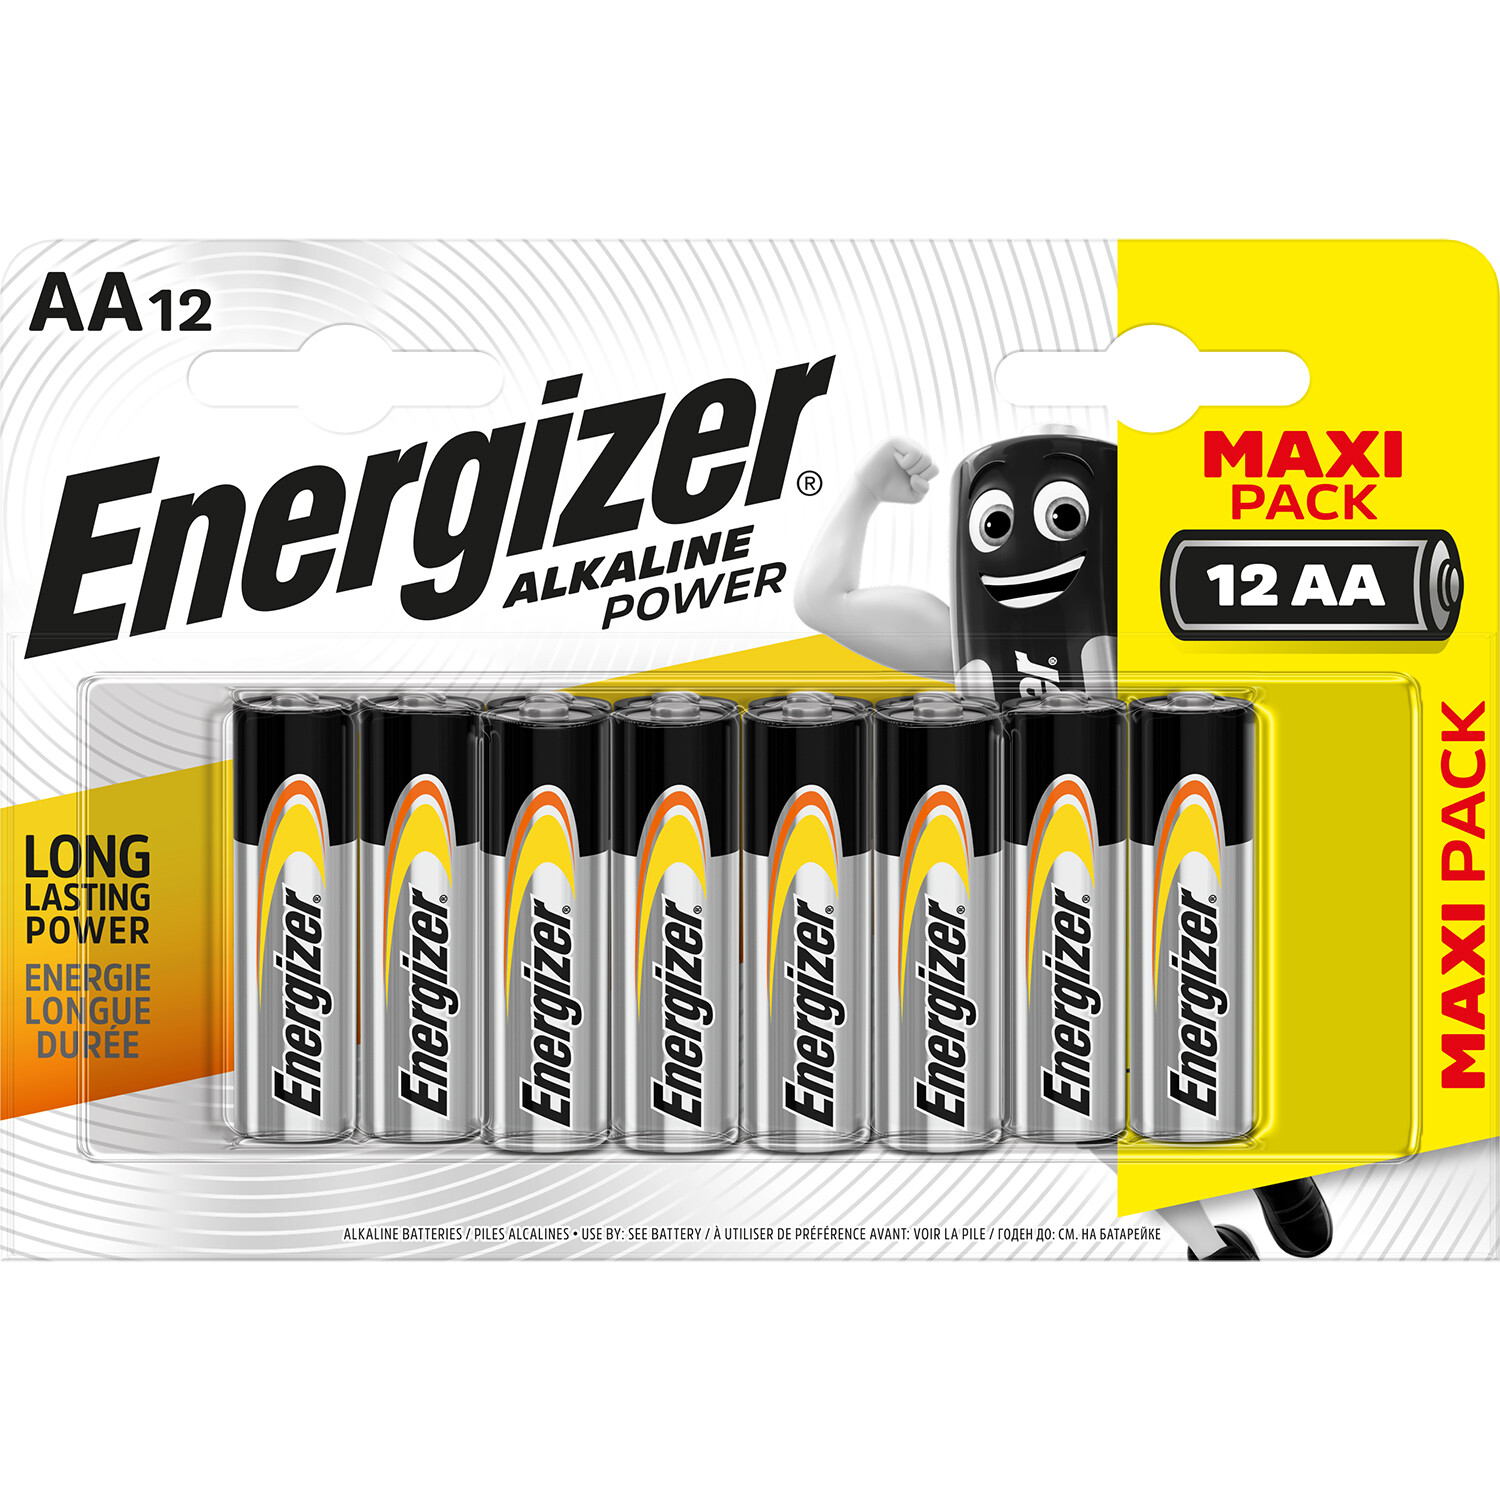 Energizer AA 12 Pack Alkaline Power Batteries Image